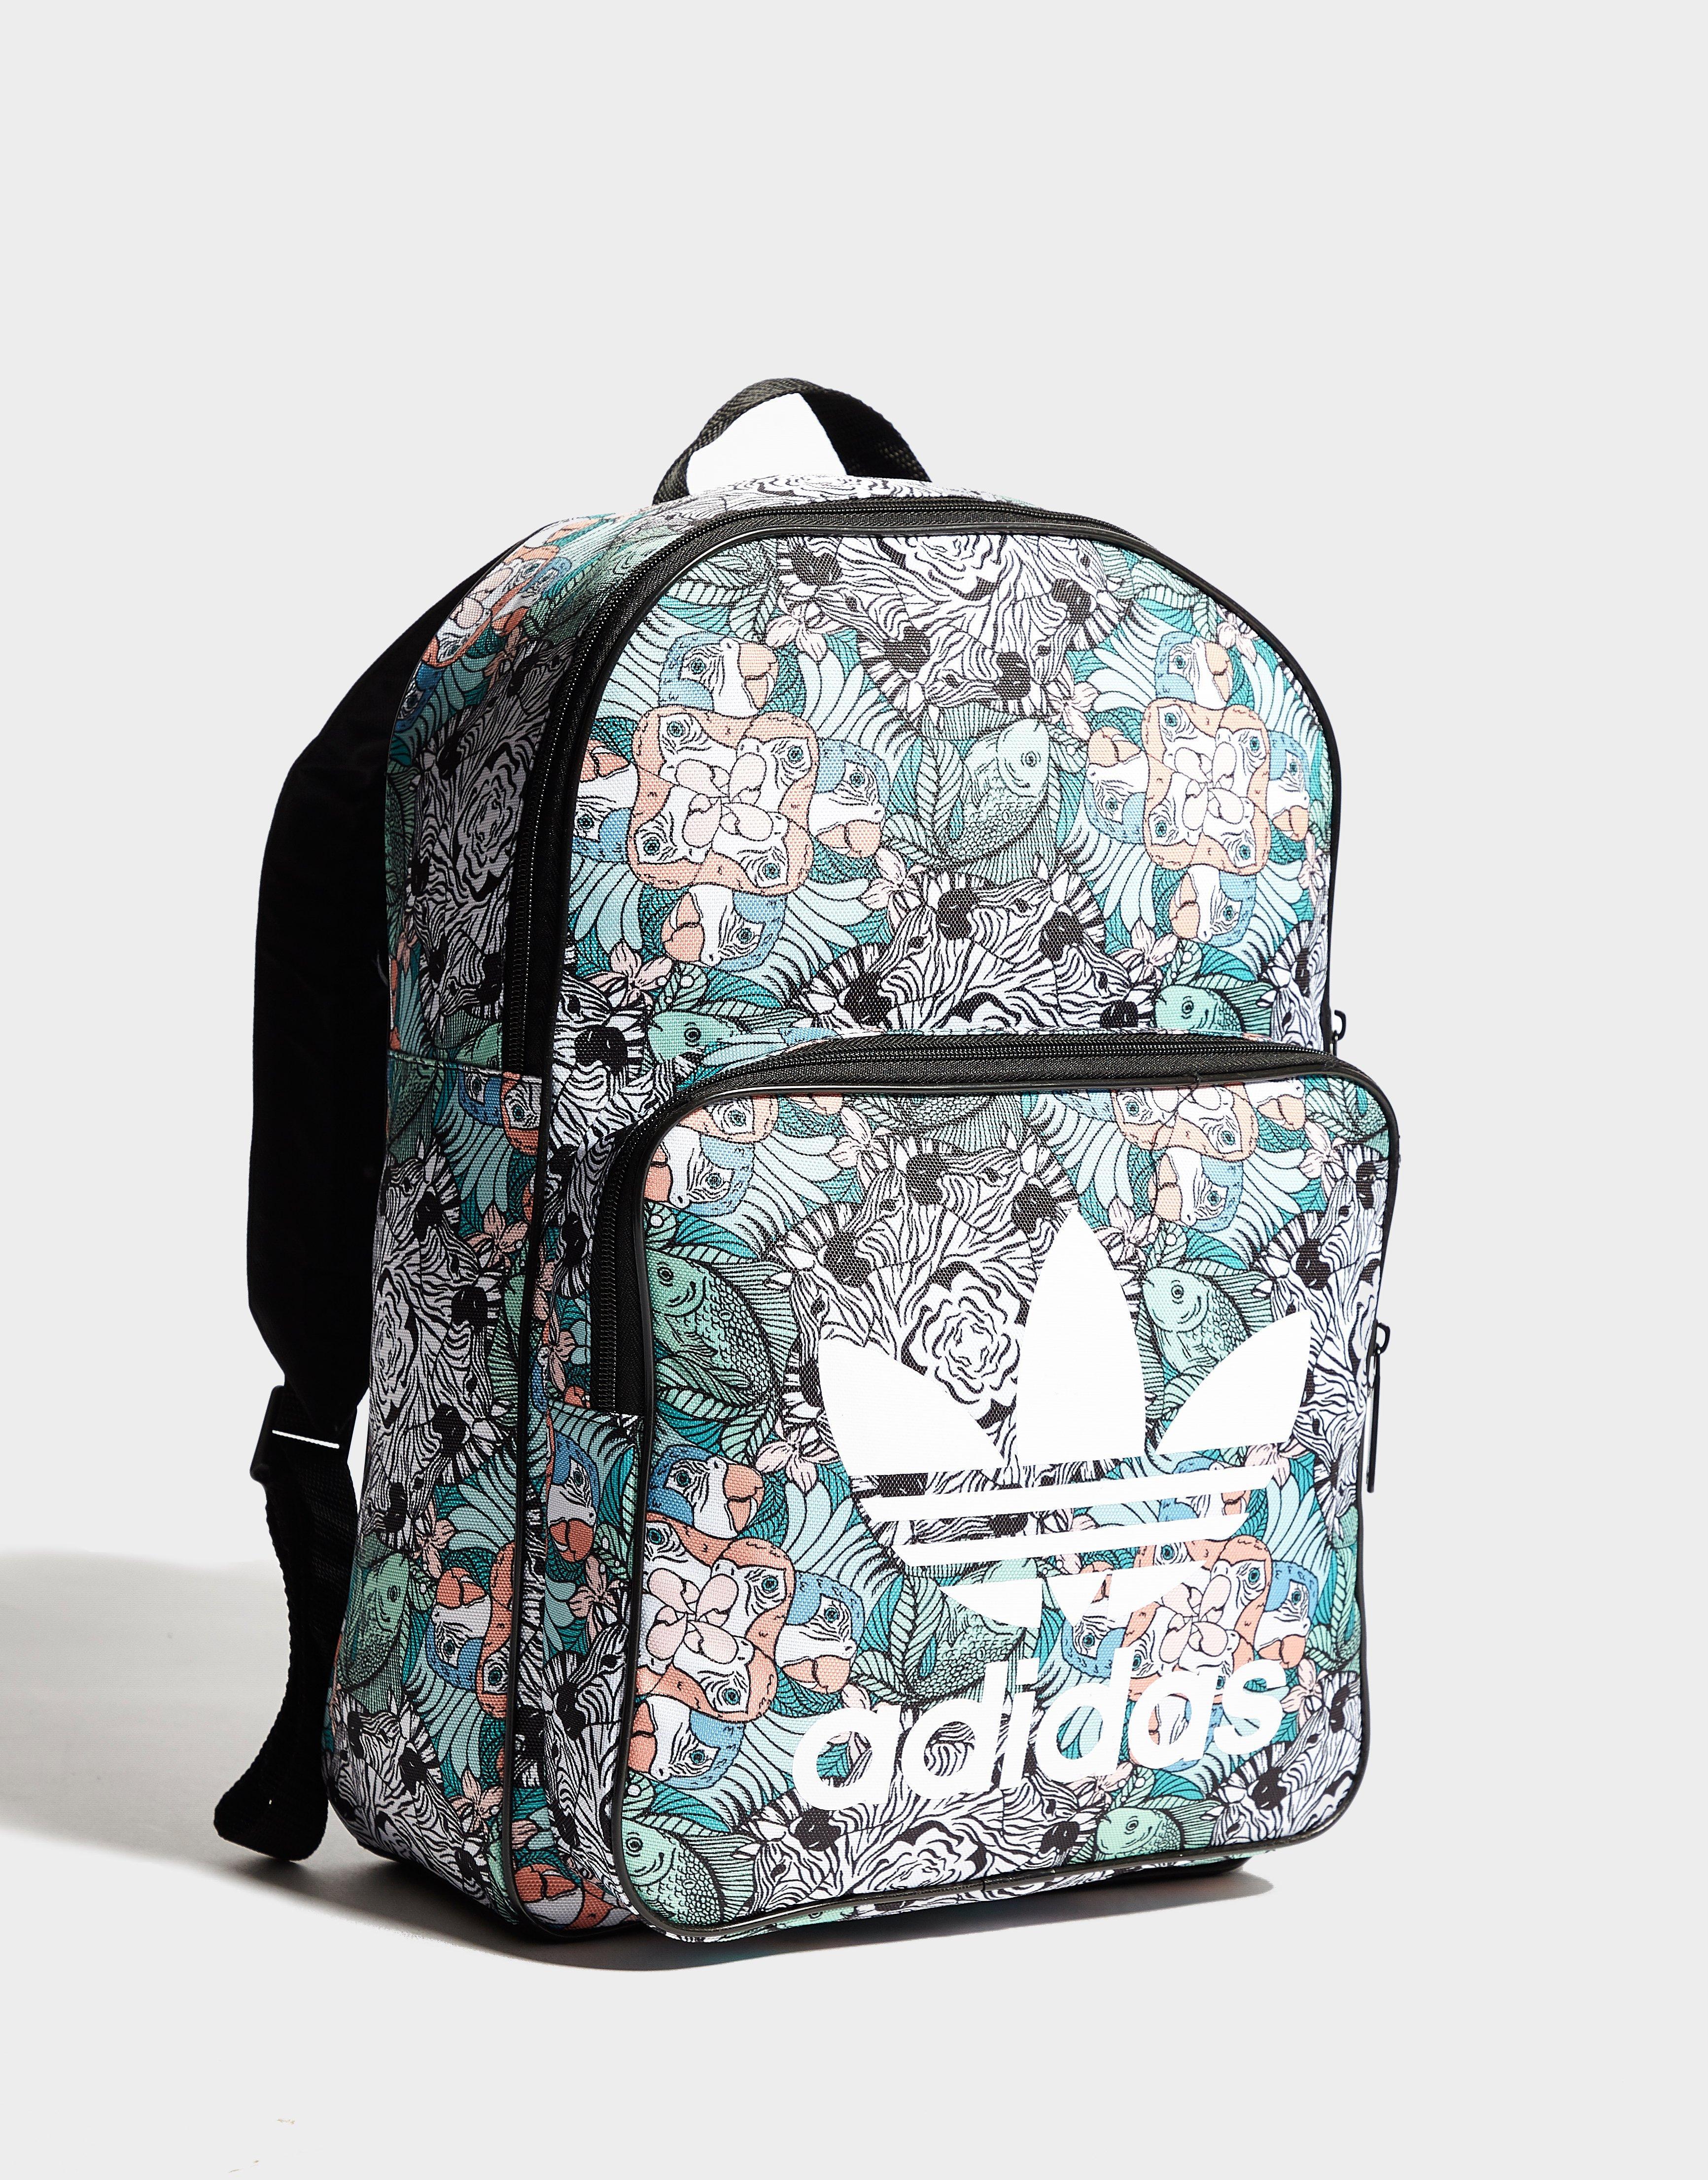 adidas animal backpack